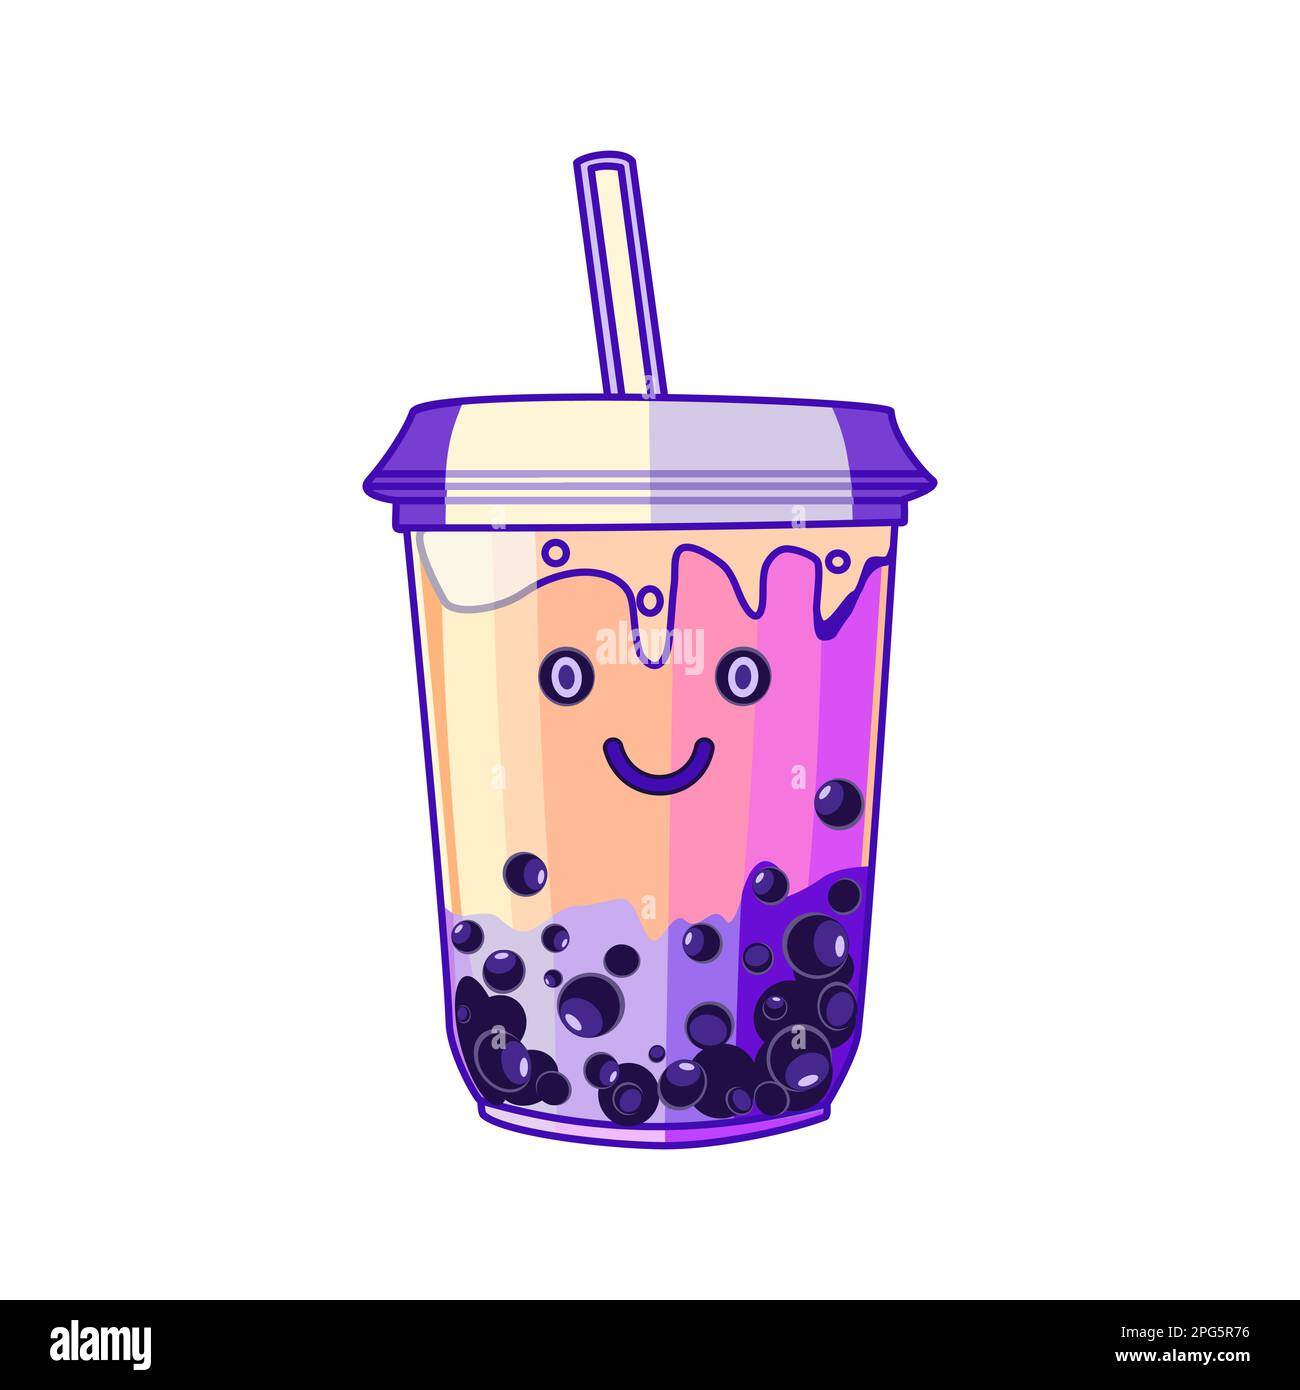 https://c8.alamy.com/comp/2PG5R76/boba-tea-lavender-flavor-with-funny-face-cartoon-vector-illustration-2PG5R76.jpg